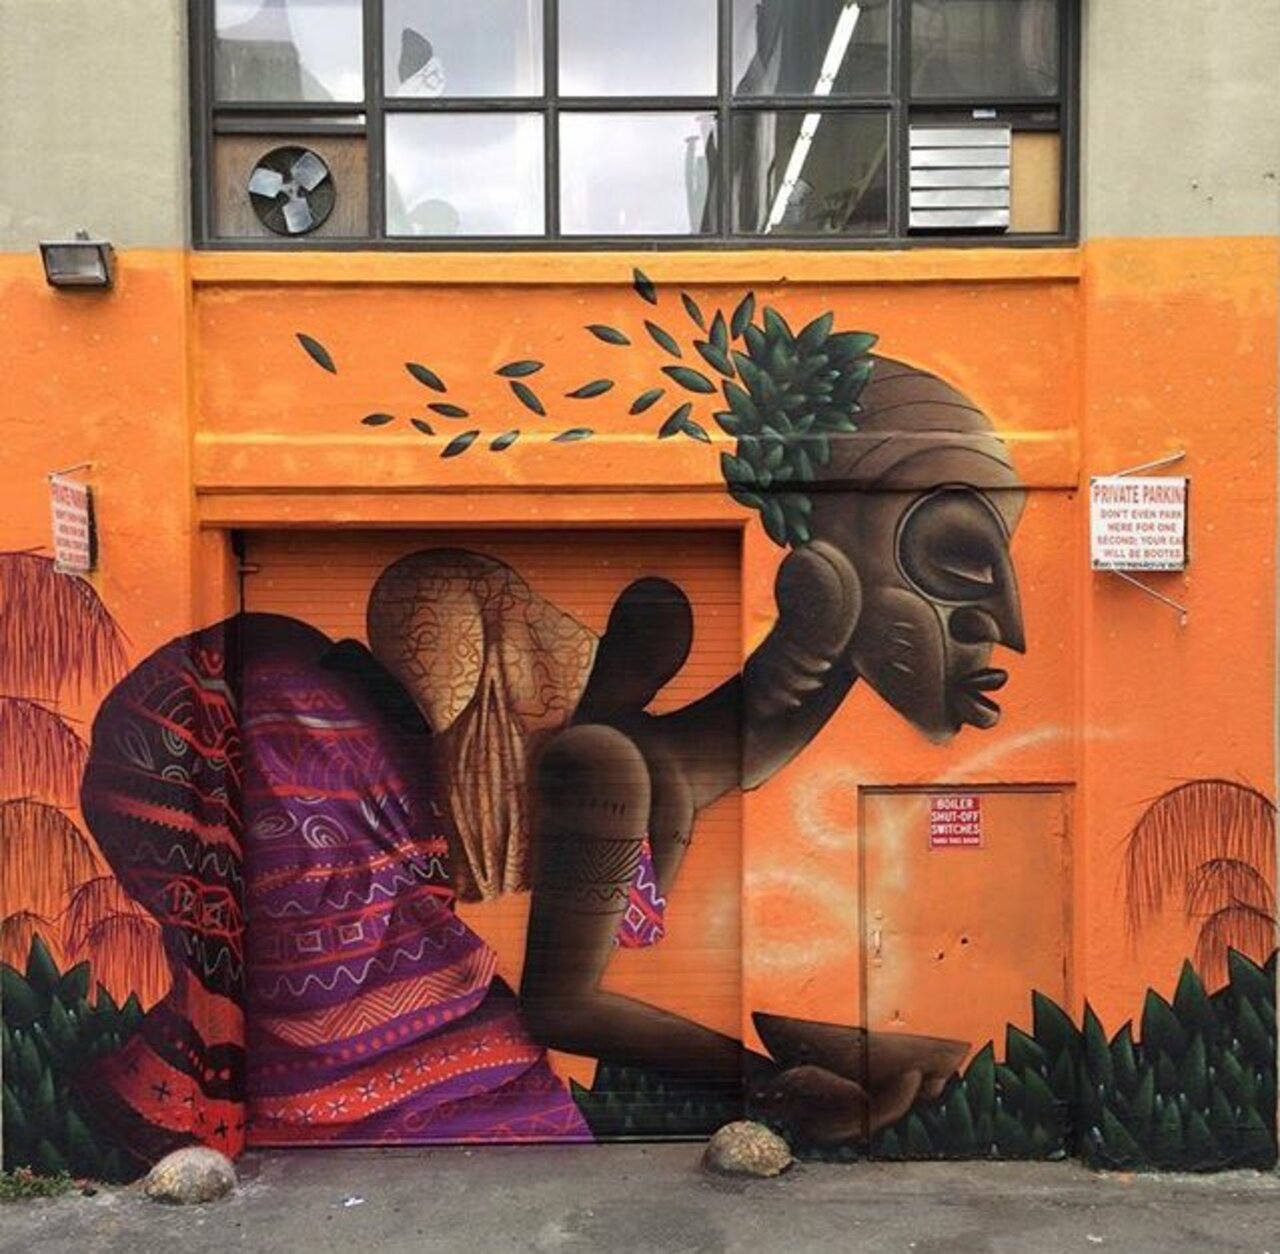 New Street Art by Alexandre Keto in NYC 

#art #graffiti #mural #streetart https://t.co/VXWjSoFxI3